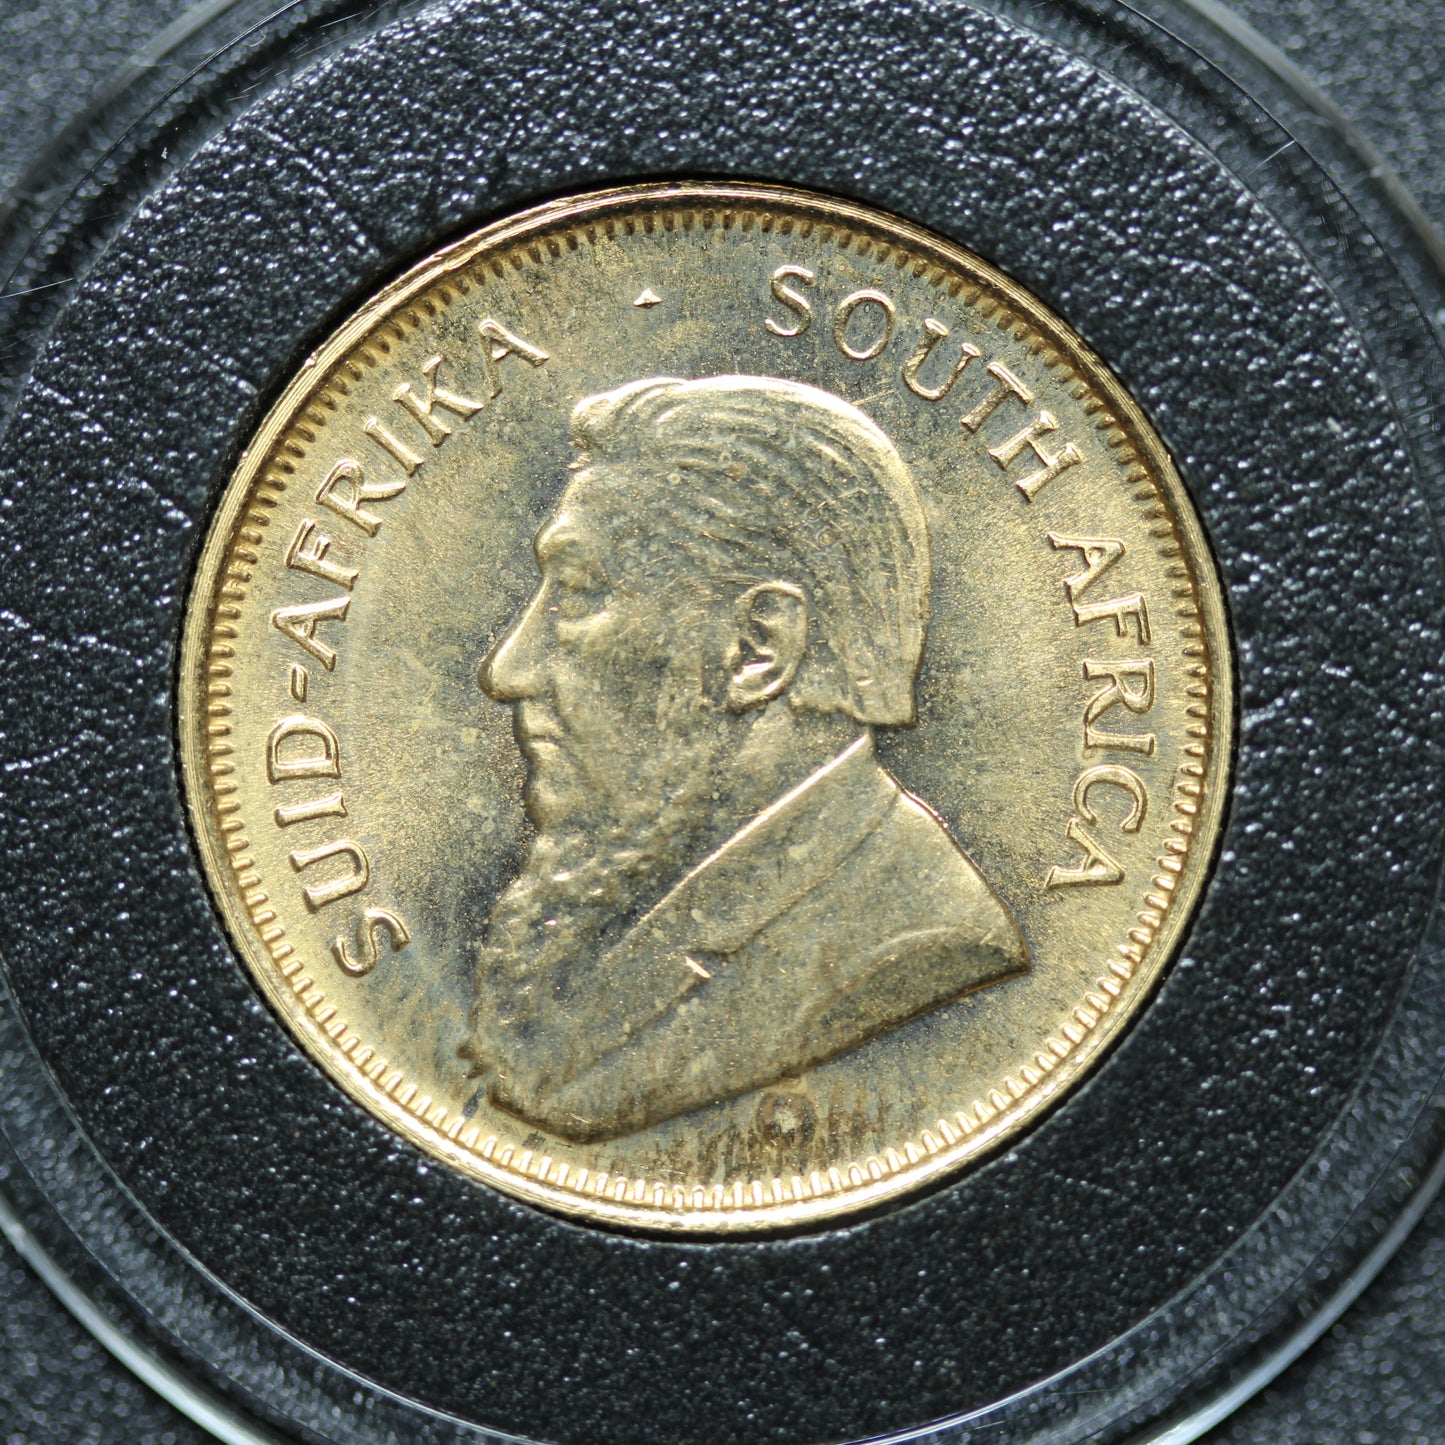 1980 1/4 oz South African Gold Krugerrand Bullion Coin w/ Capsule (#13)